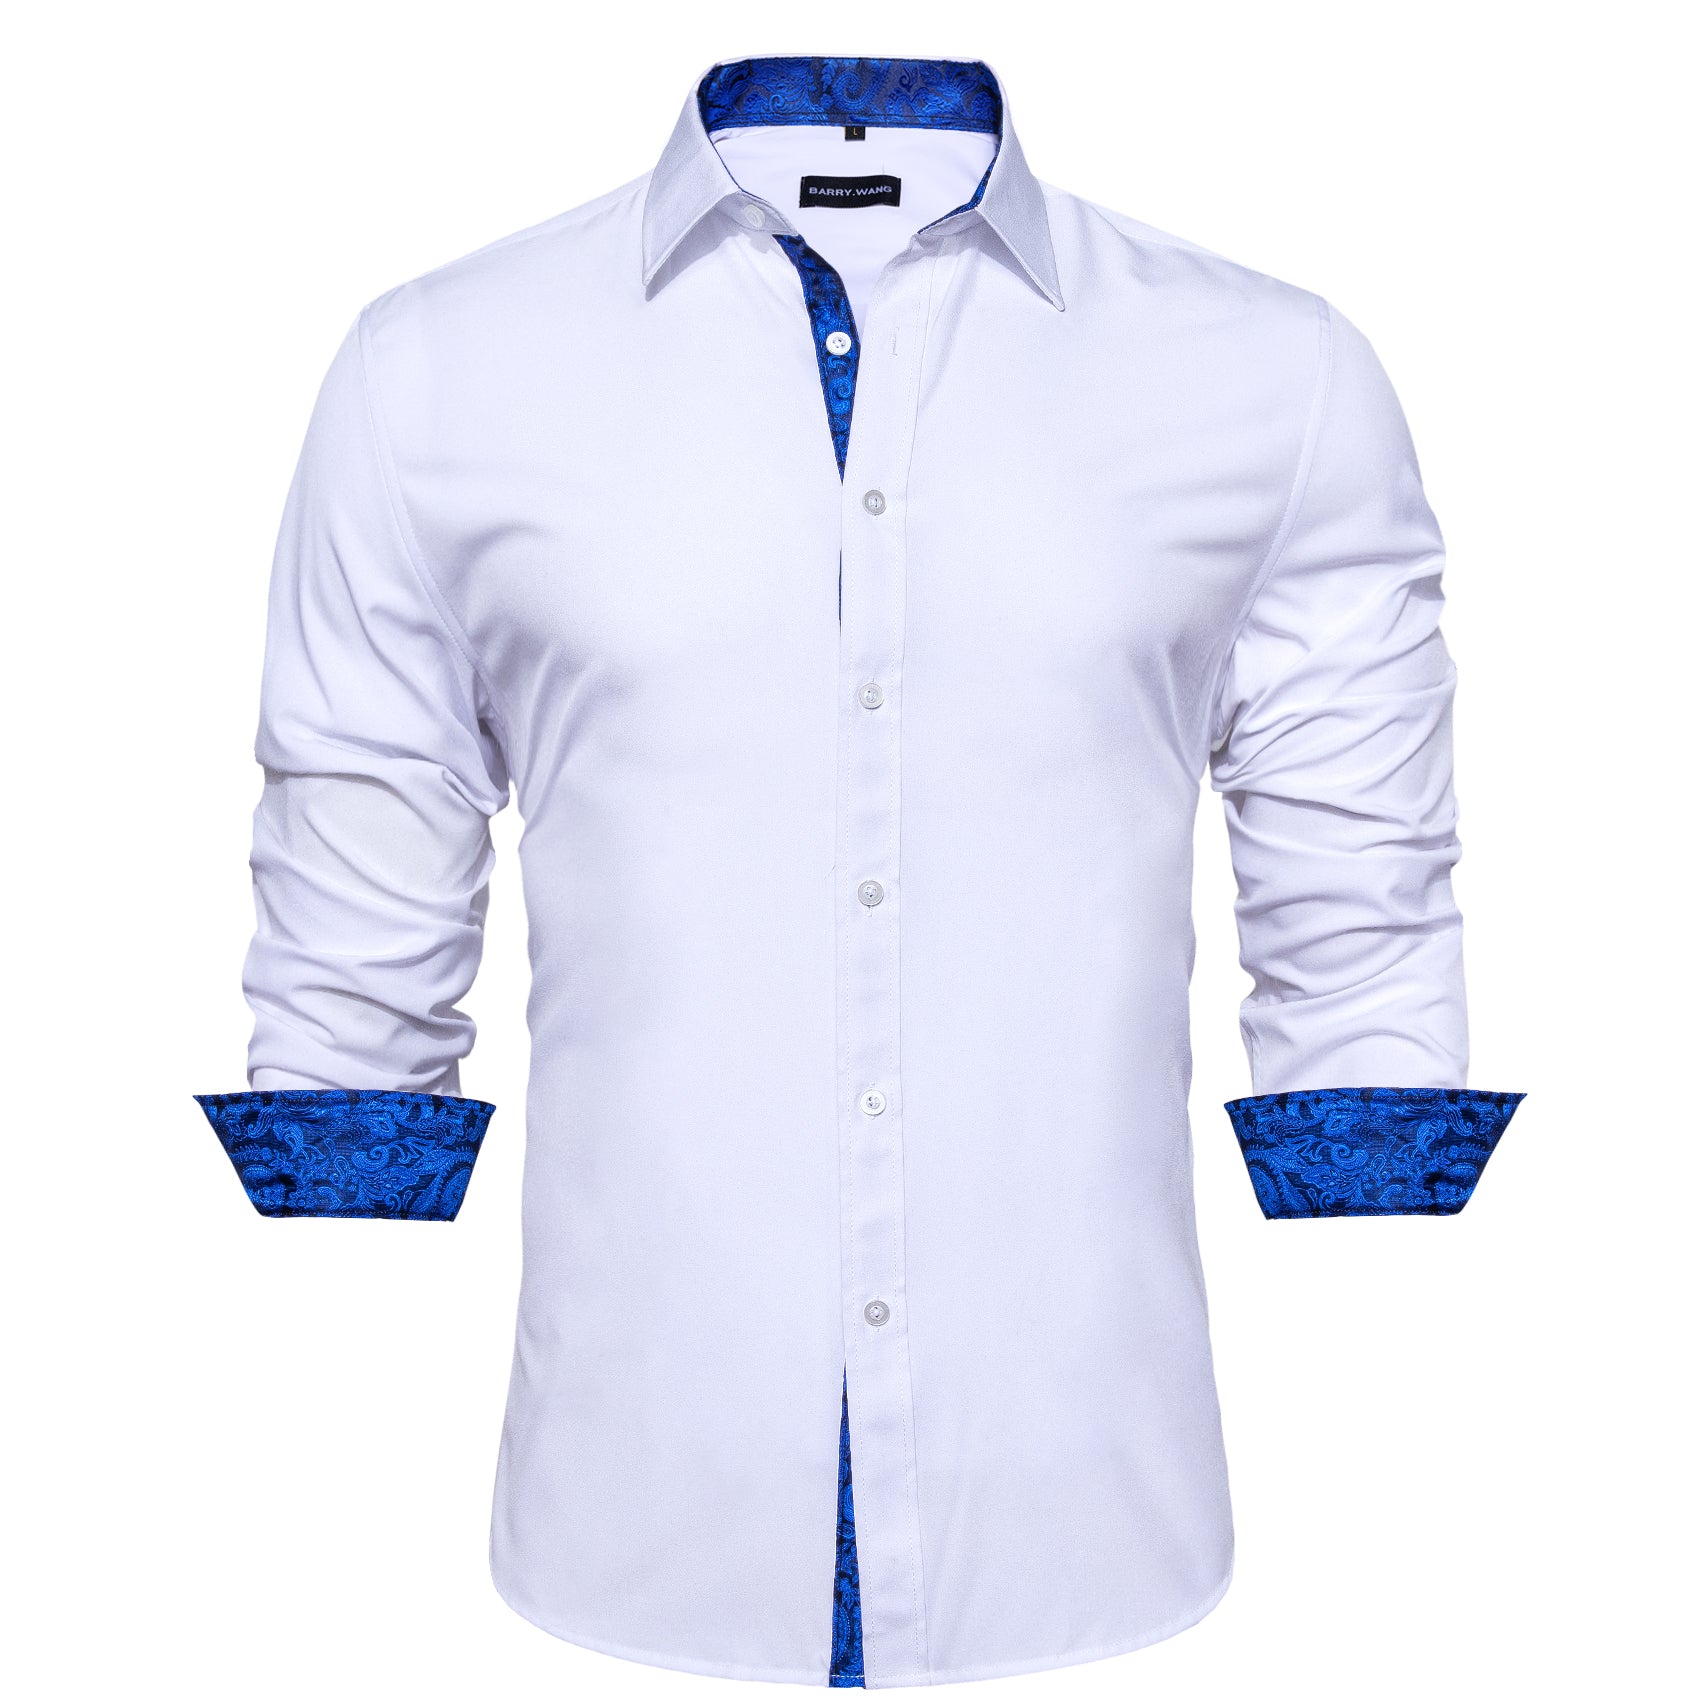 Barry.wang Fromal White Blue Splicing Men's Shirt